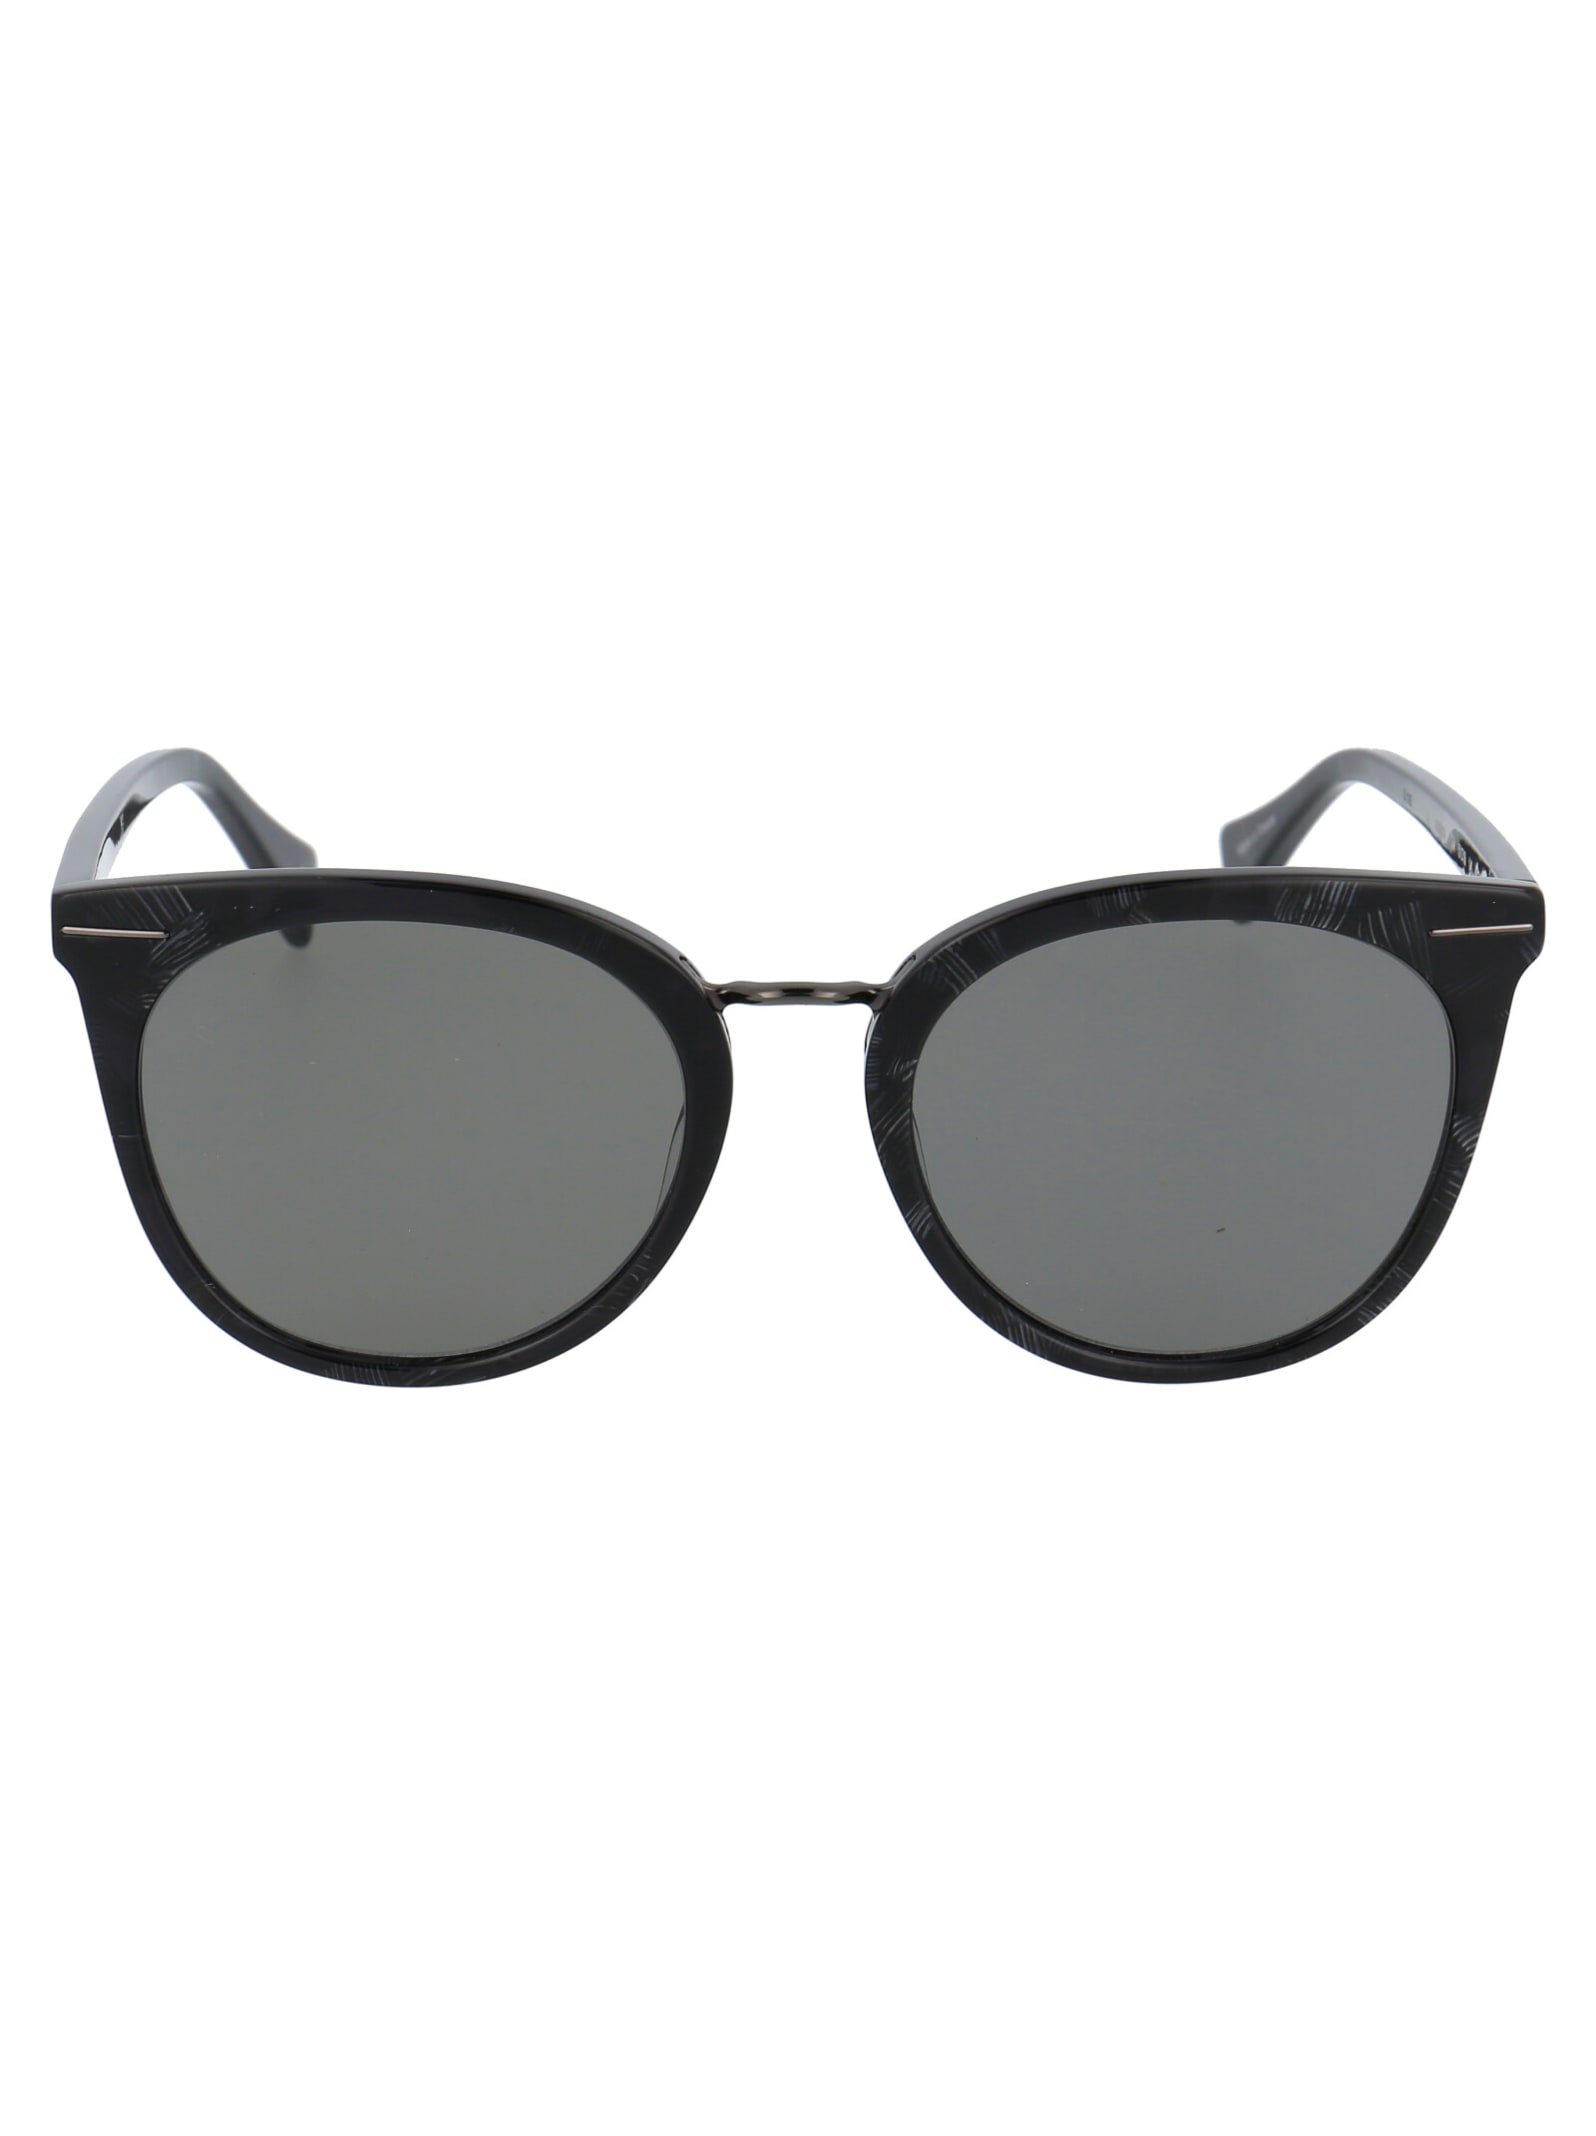 Yohji Yamamoto Ys5006 Sunglasses